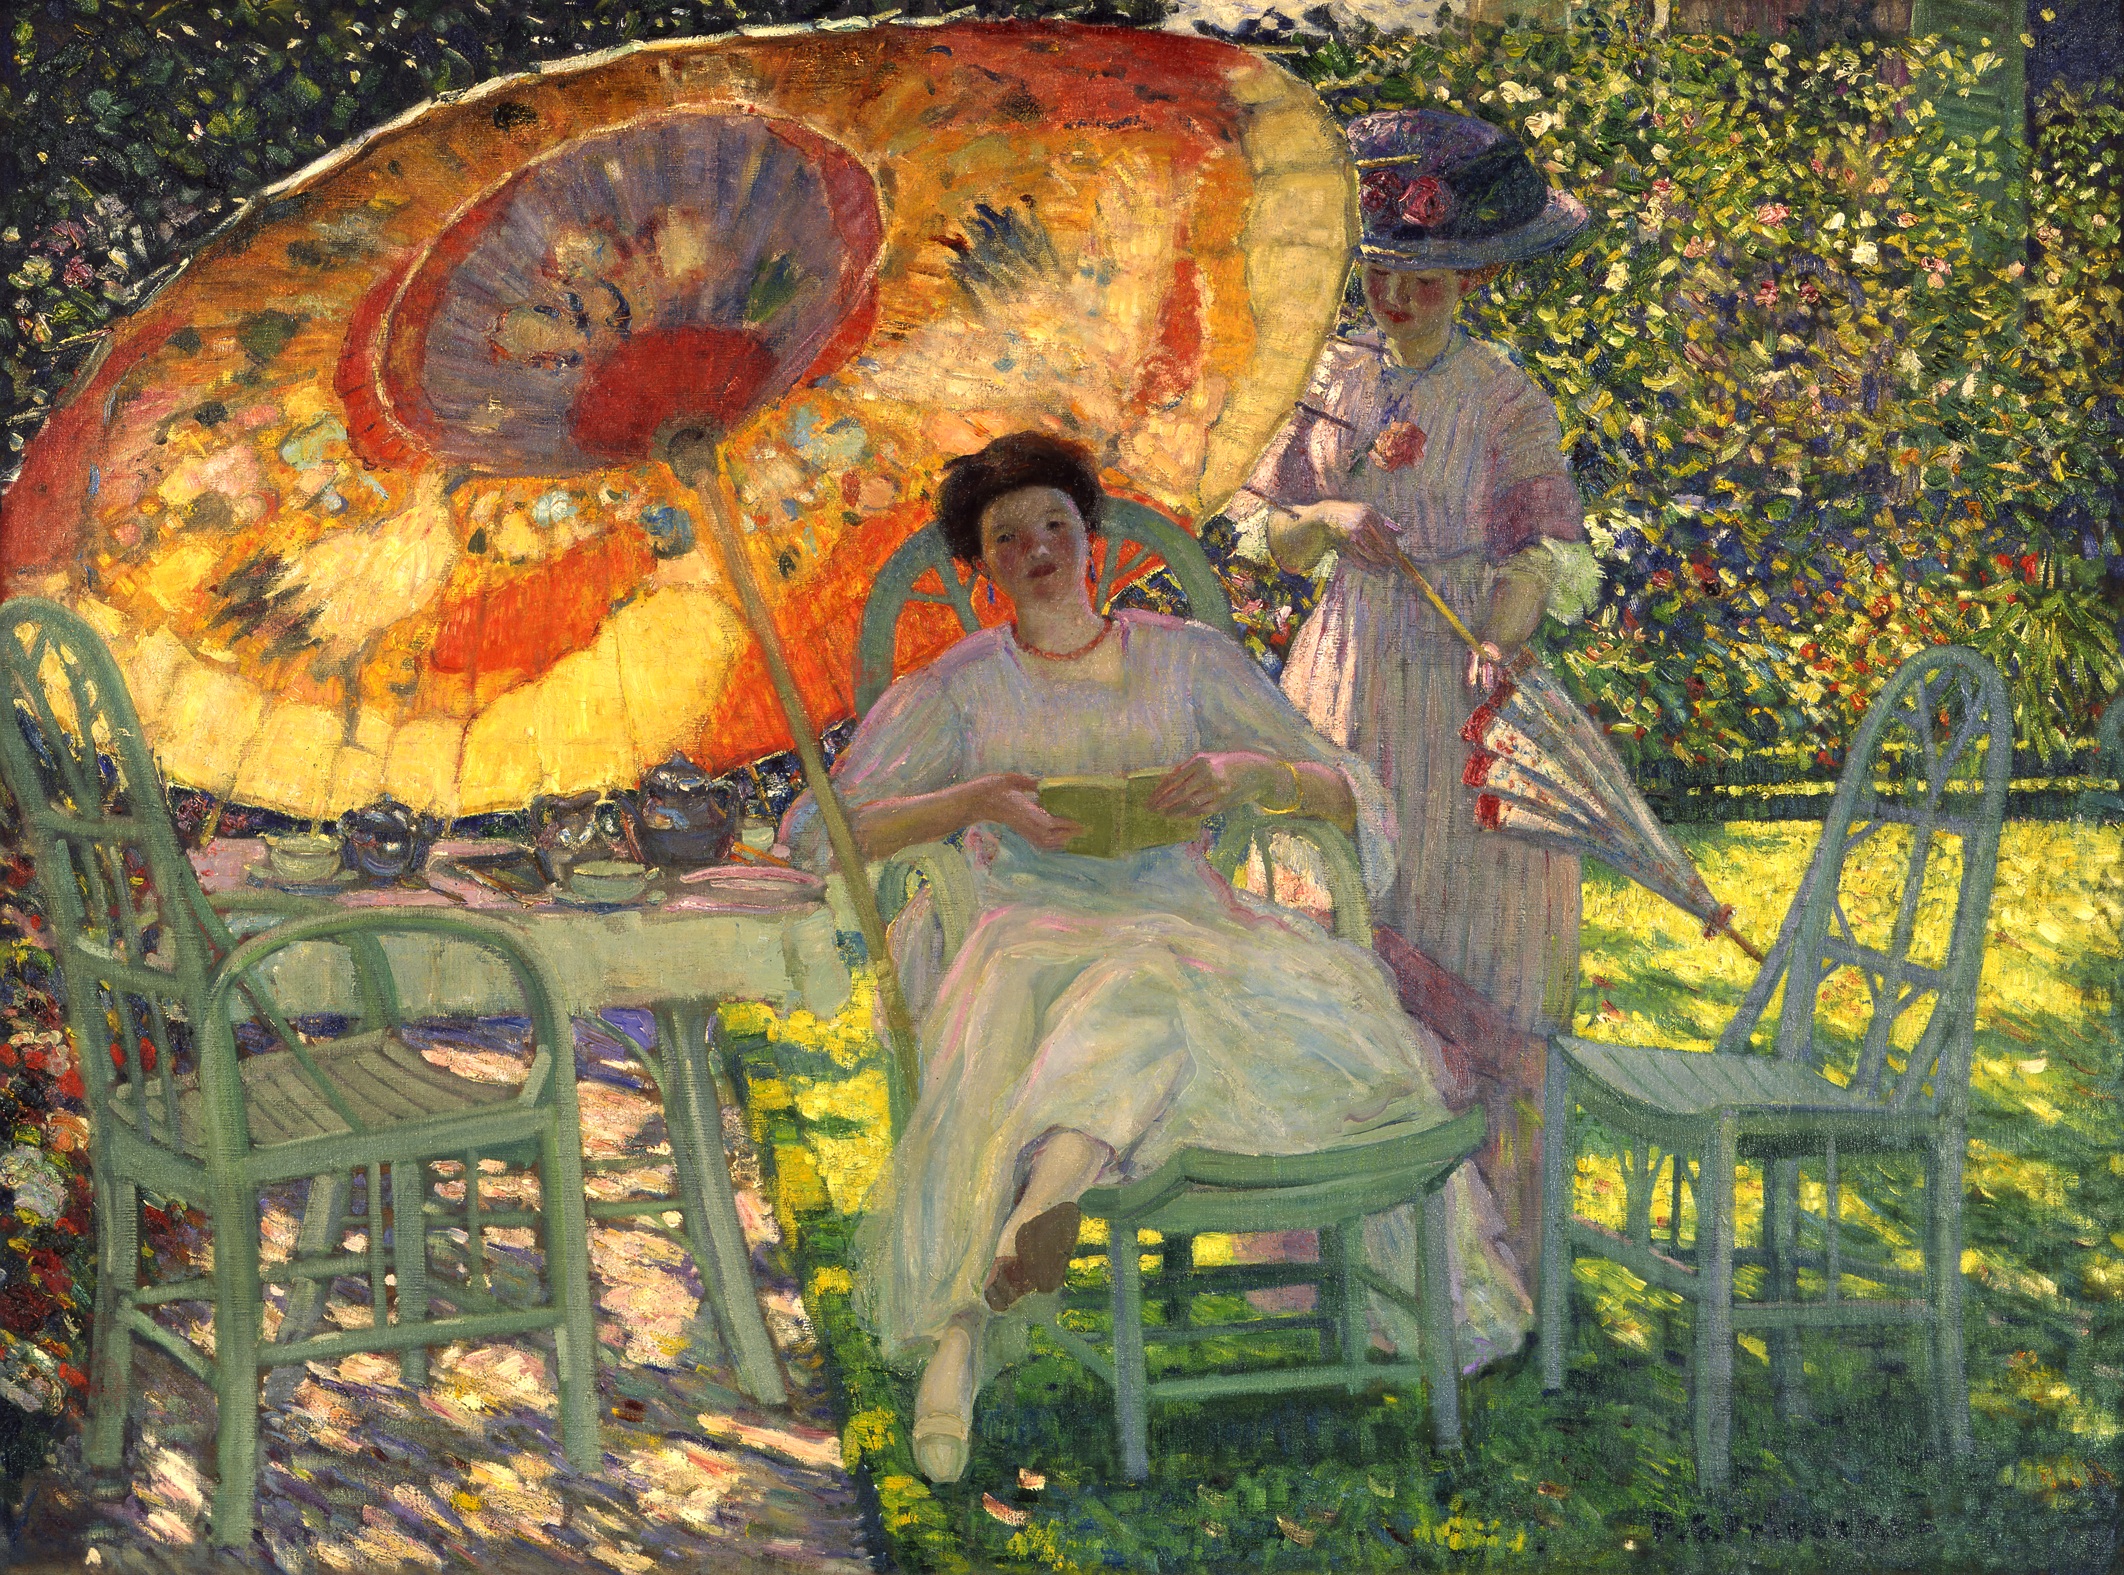 Le parasol de jardin by Frederick Carl Frieseke - c. 1910 